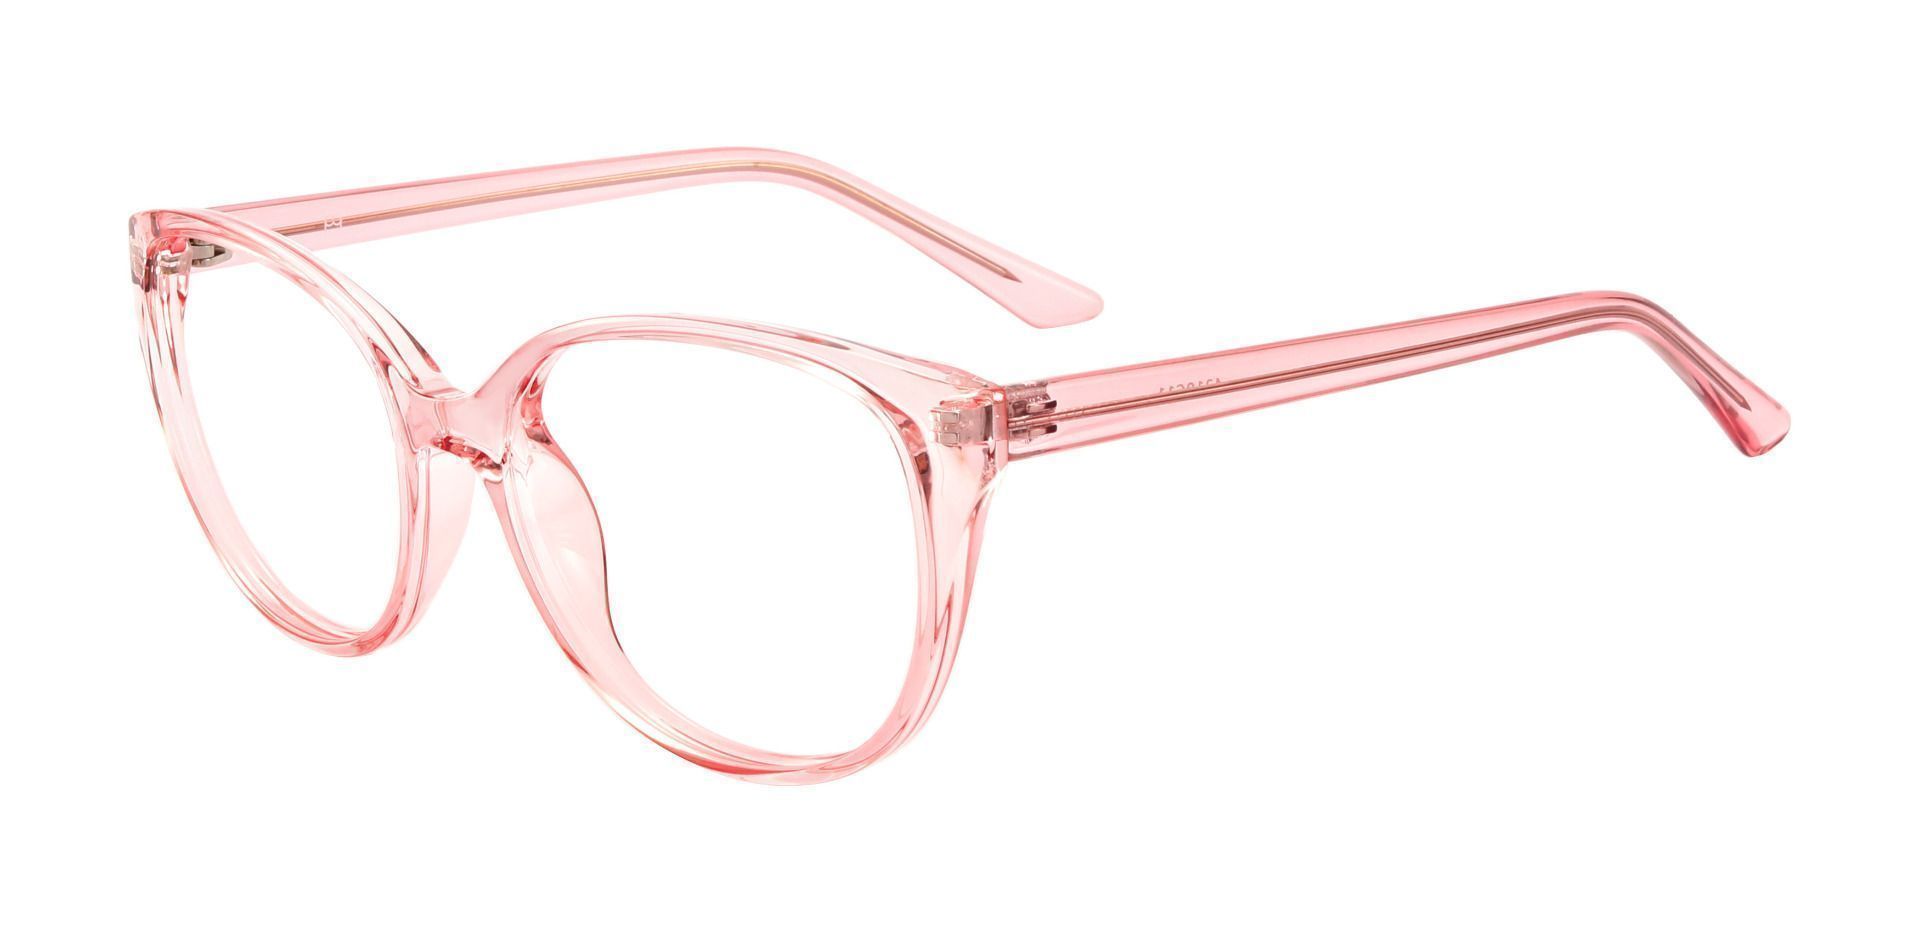 Polly Oval Prescription Glasses - Pink